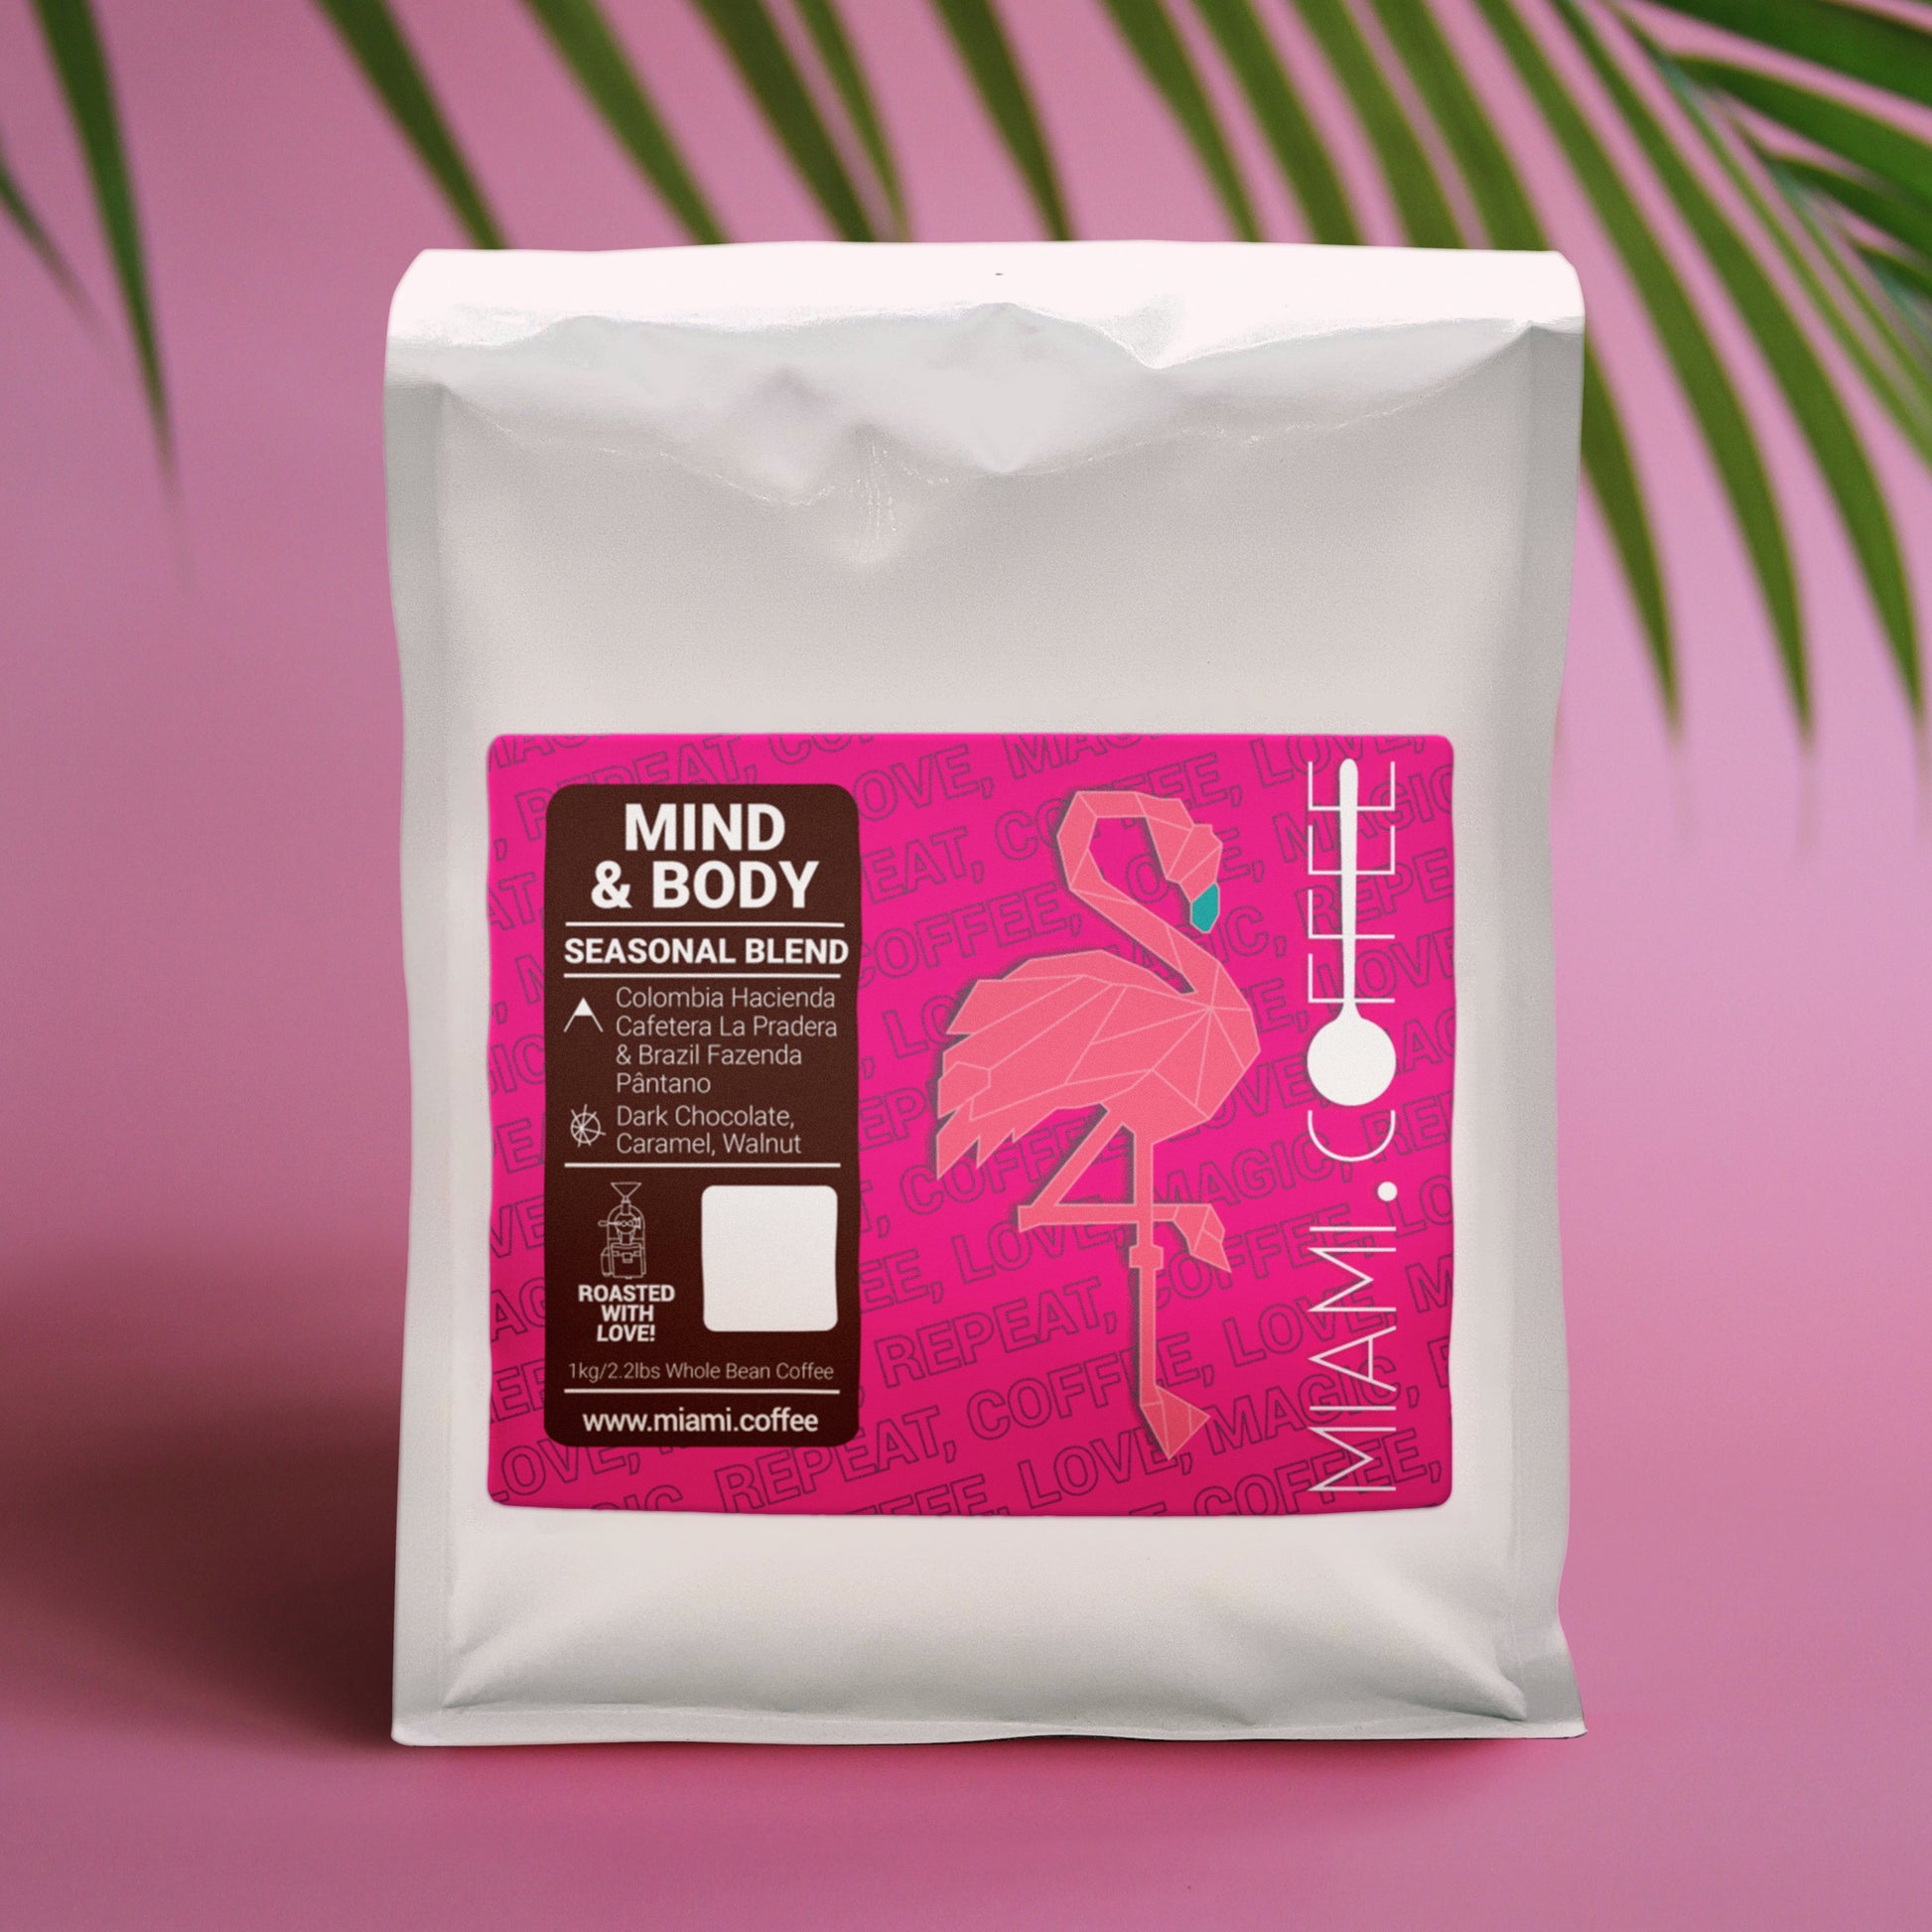 Mind & Body Blend by Miami dot Coffee Bolsa de 1 Kilo. Descriptores de sabor: chocolate amargo, caramelo, nuez